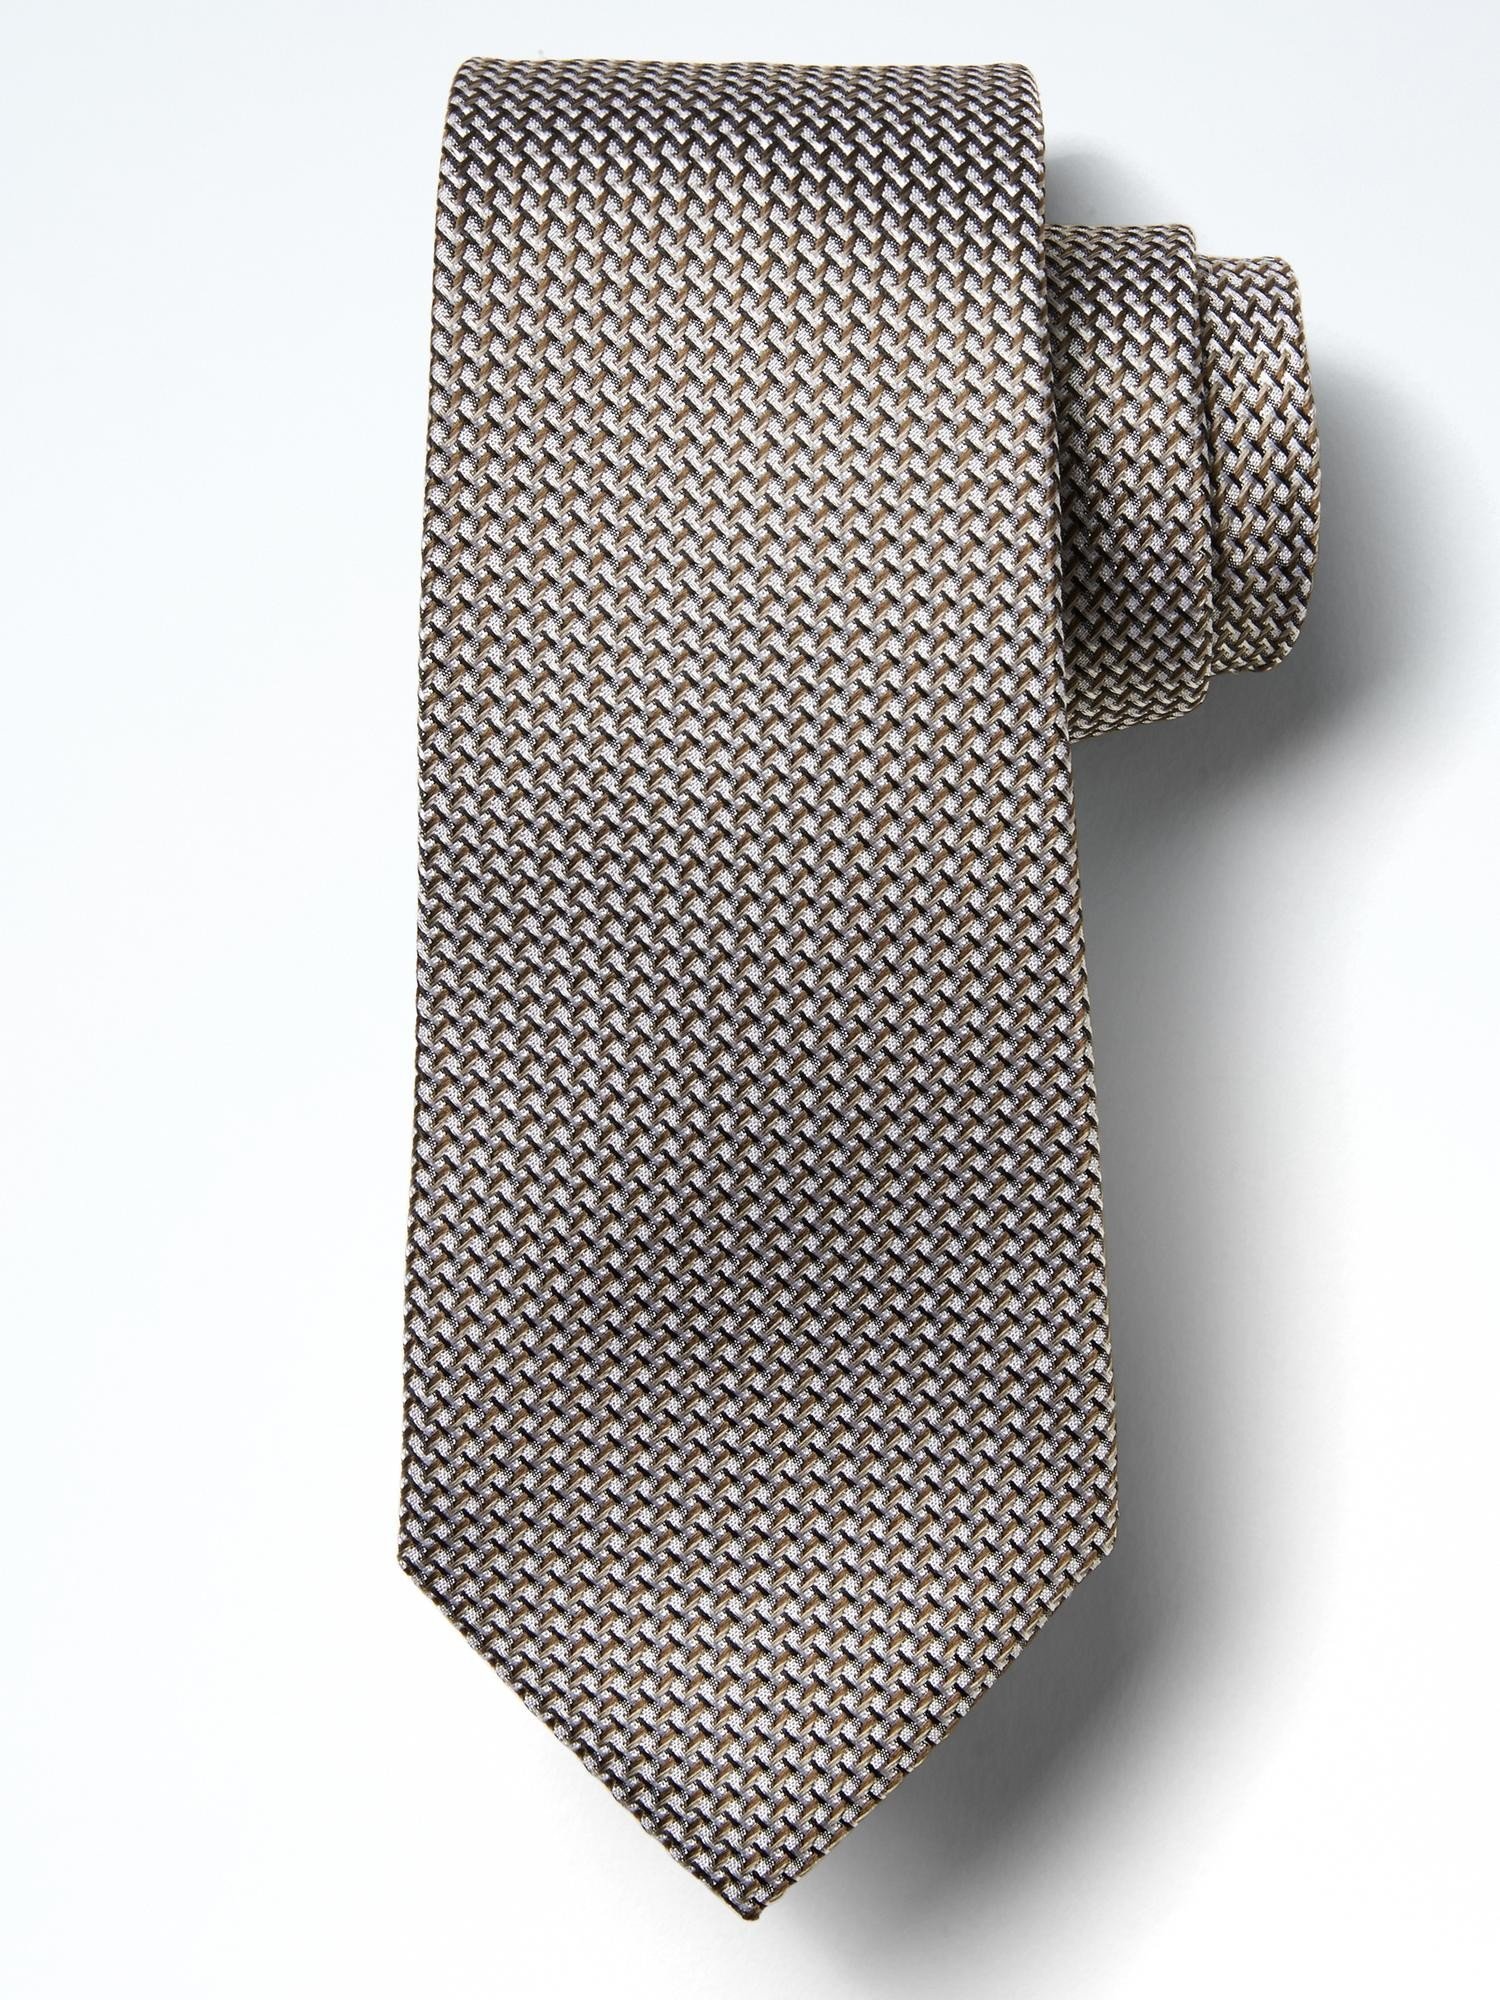 İpek kravat product image